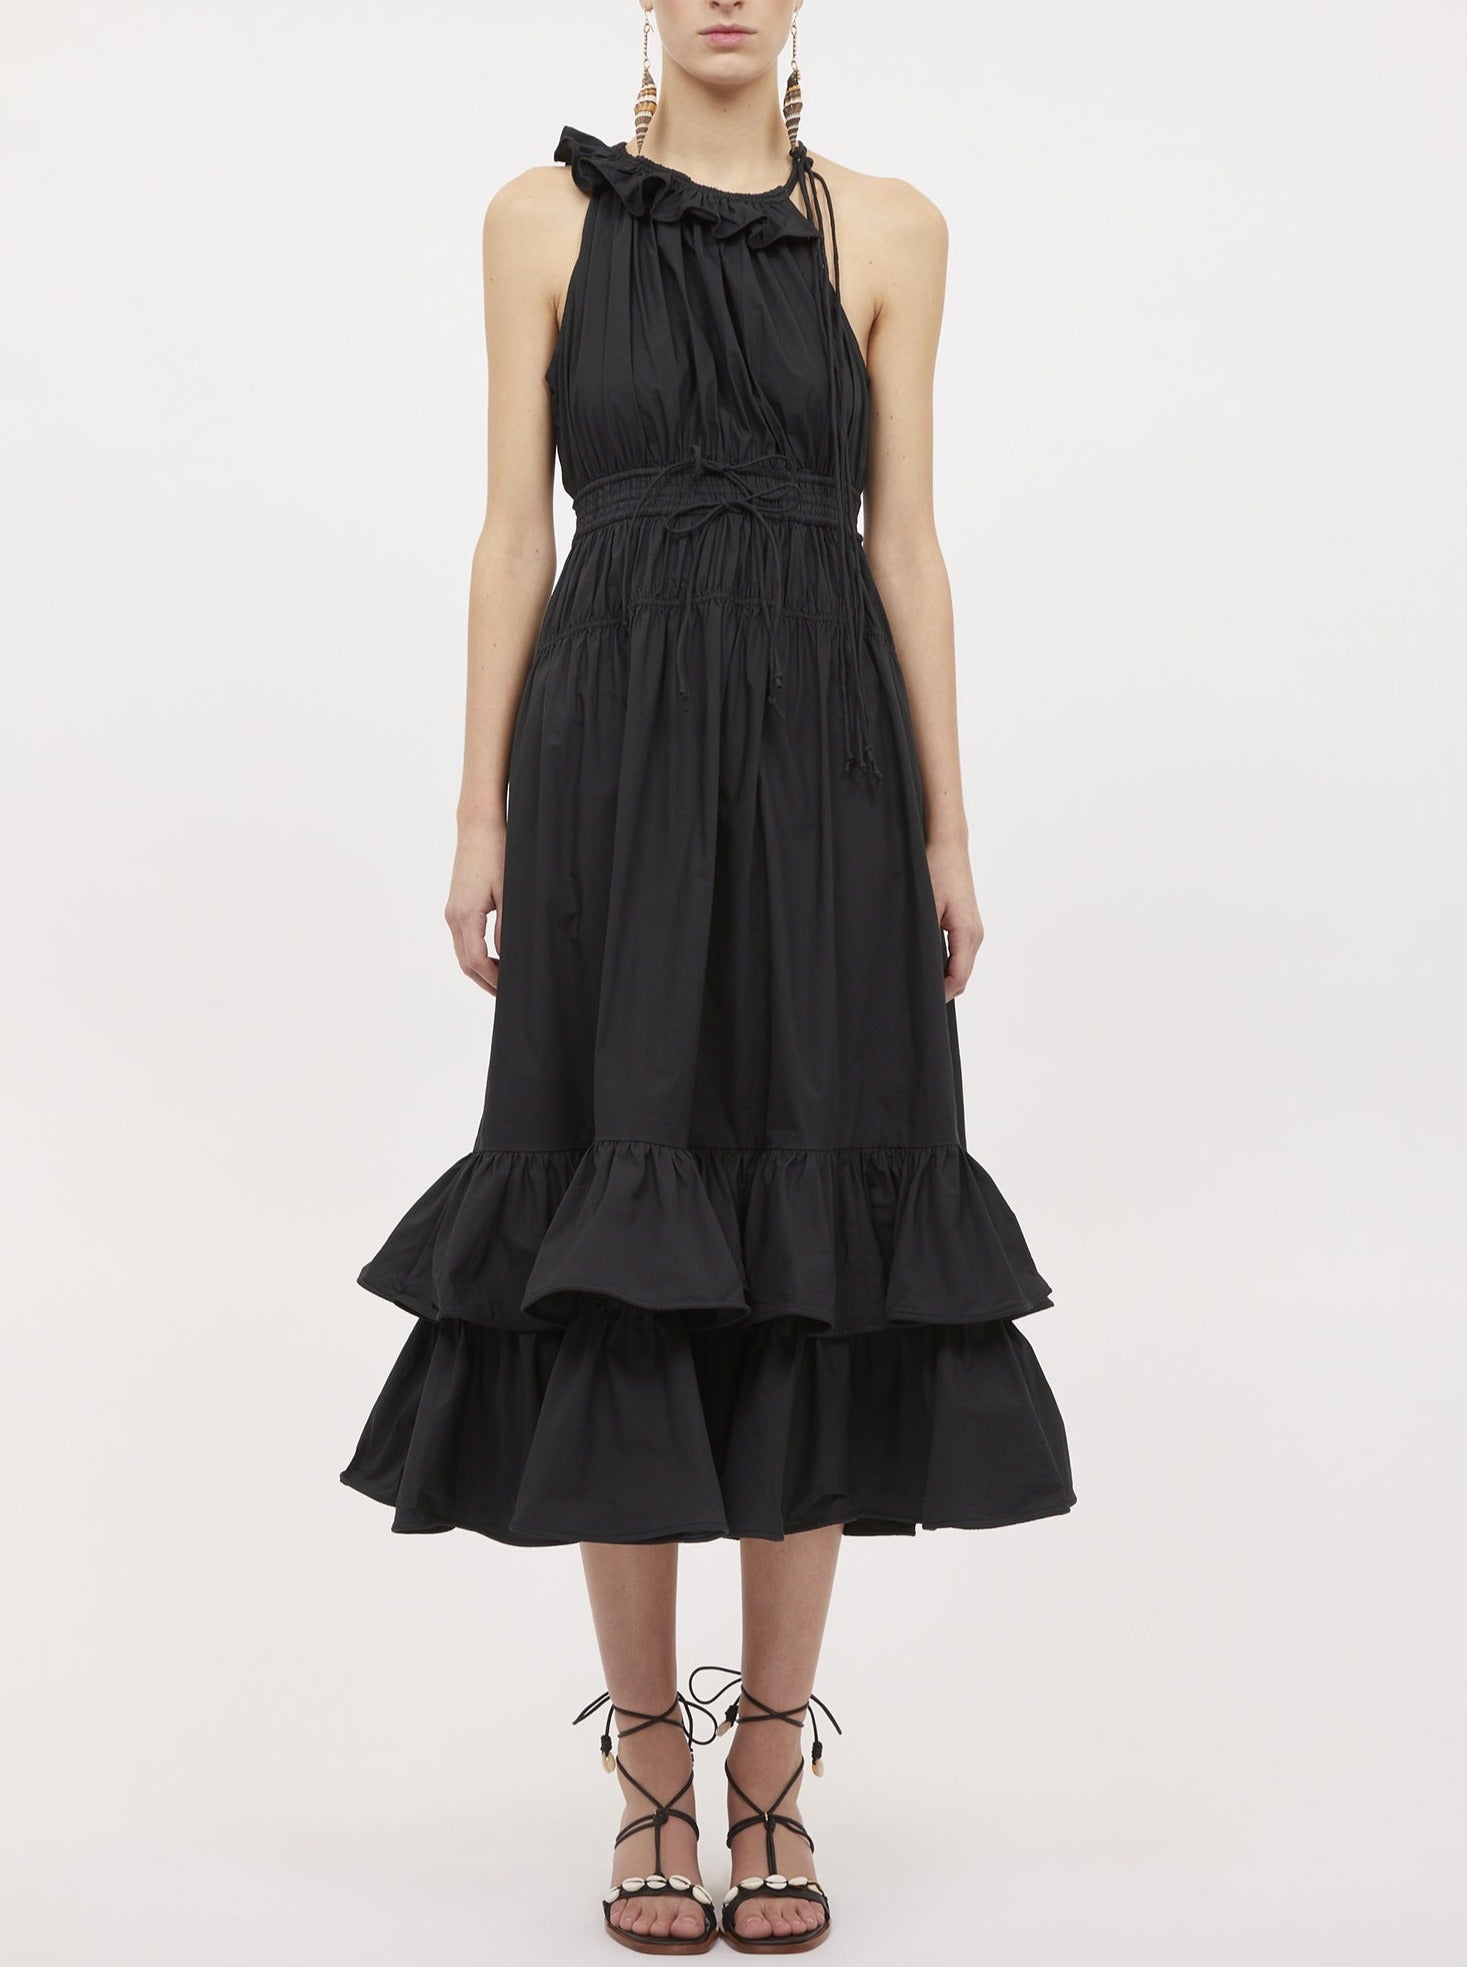 ULLA JOHNSON: Delfina Dress, black